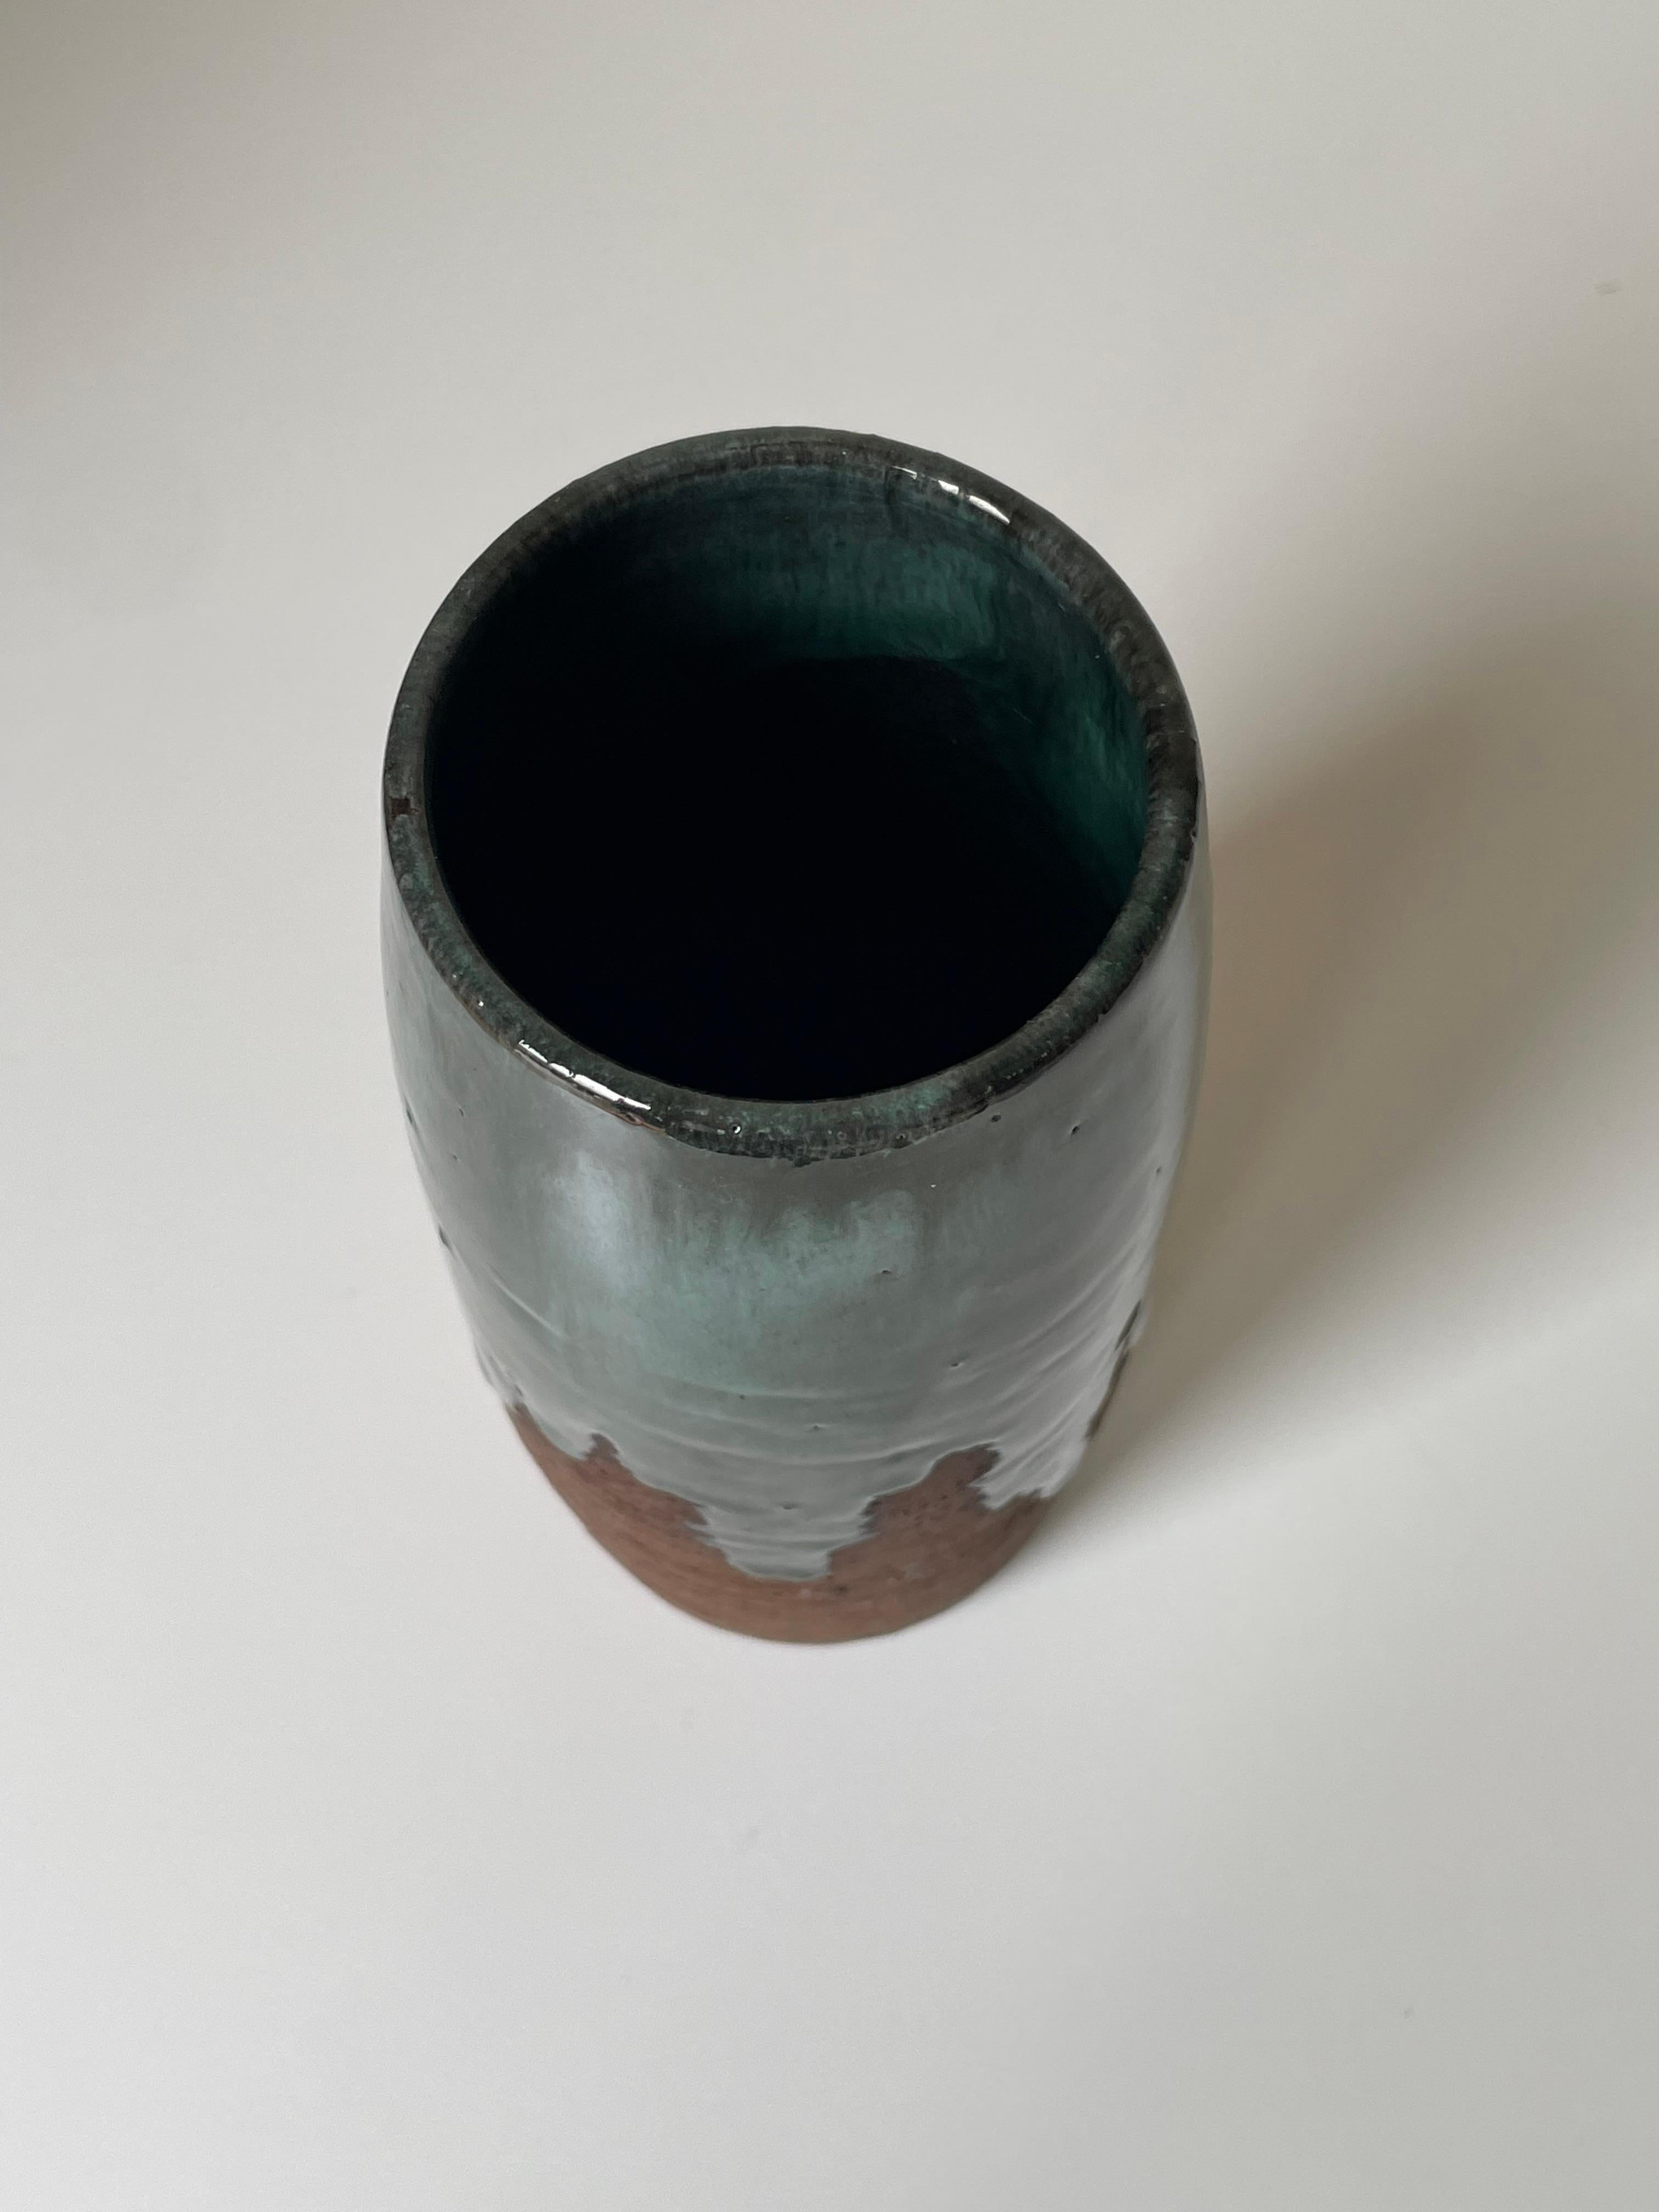 Rustikale Chamotte Grüne laufende glasierte Vase, 1960er Jahre (Keramik) im Angebot